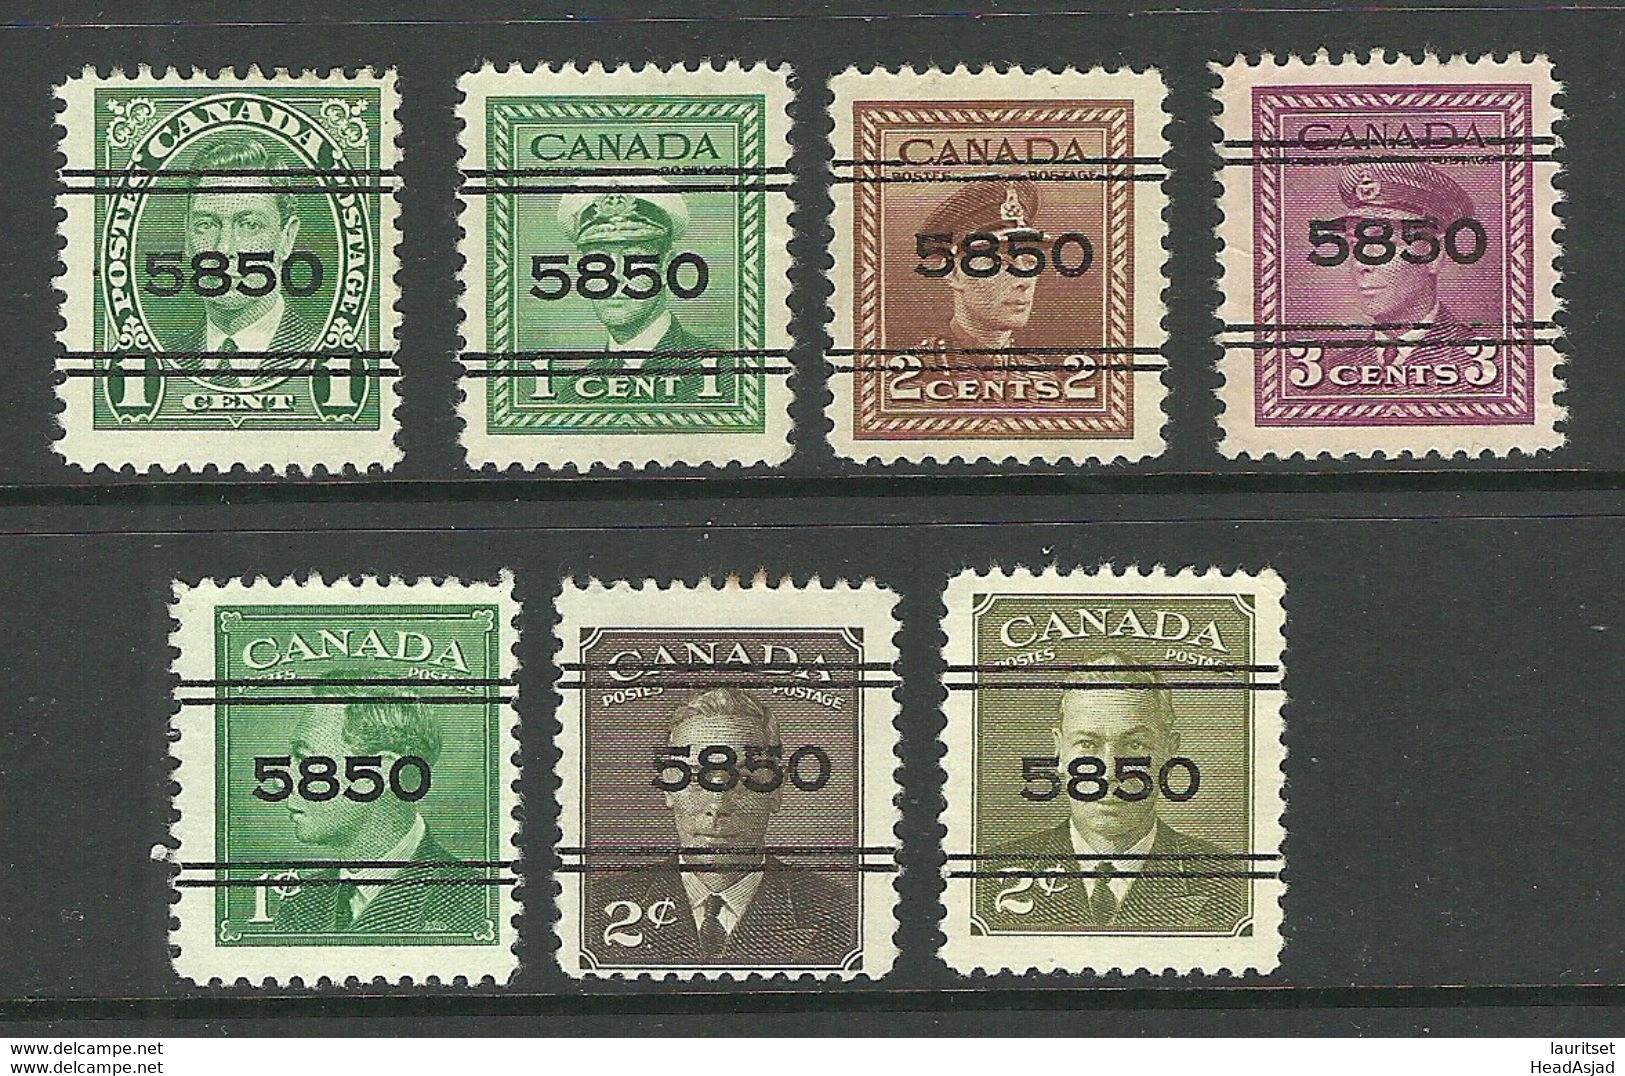 Canada 7 Pre-cancel Stamps "5850" - Precancels